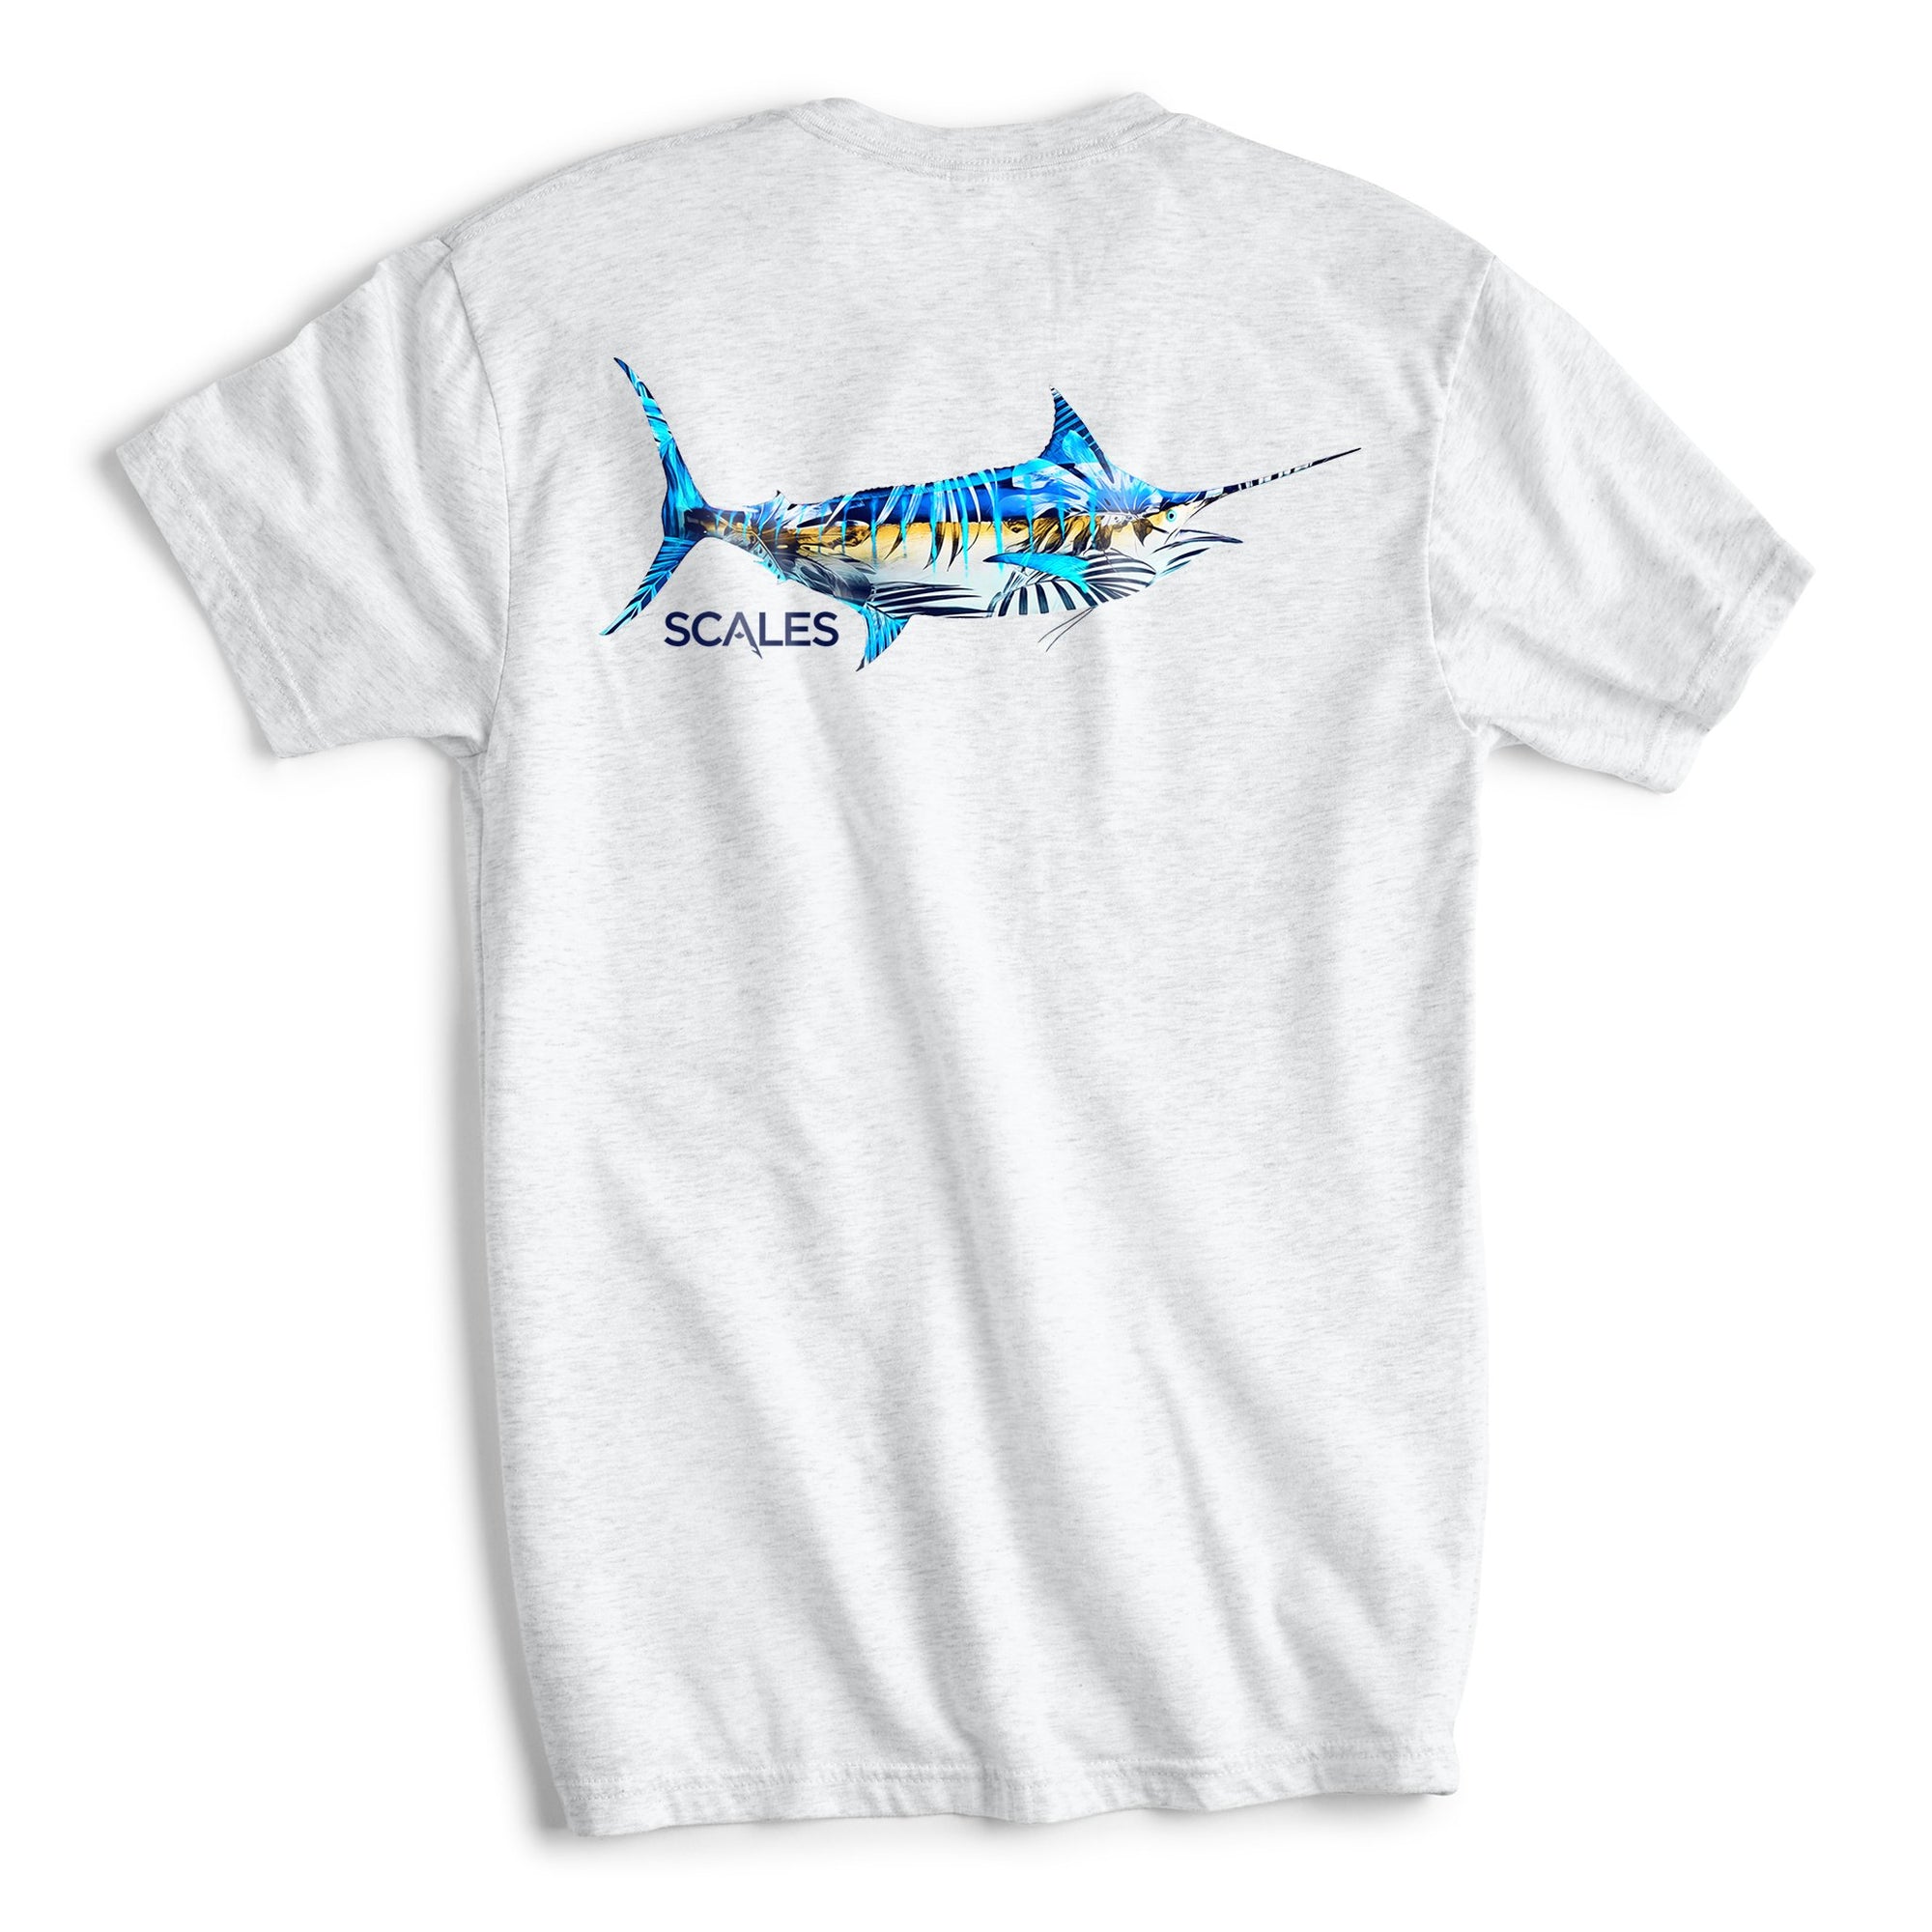 Scales Gear Tropical Marlin Tee White Heather Shirt - Rear View